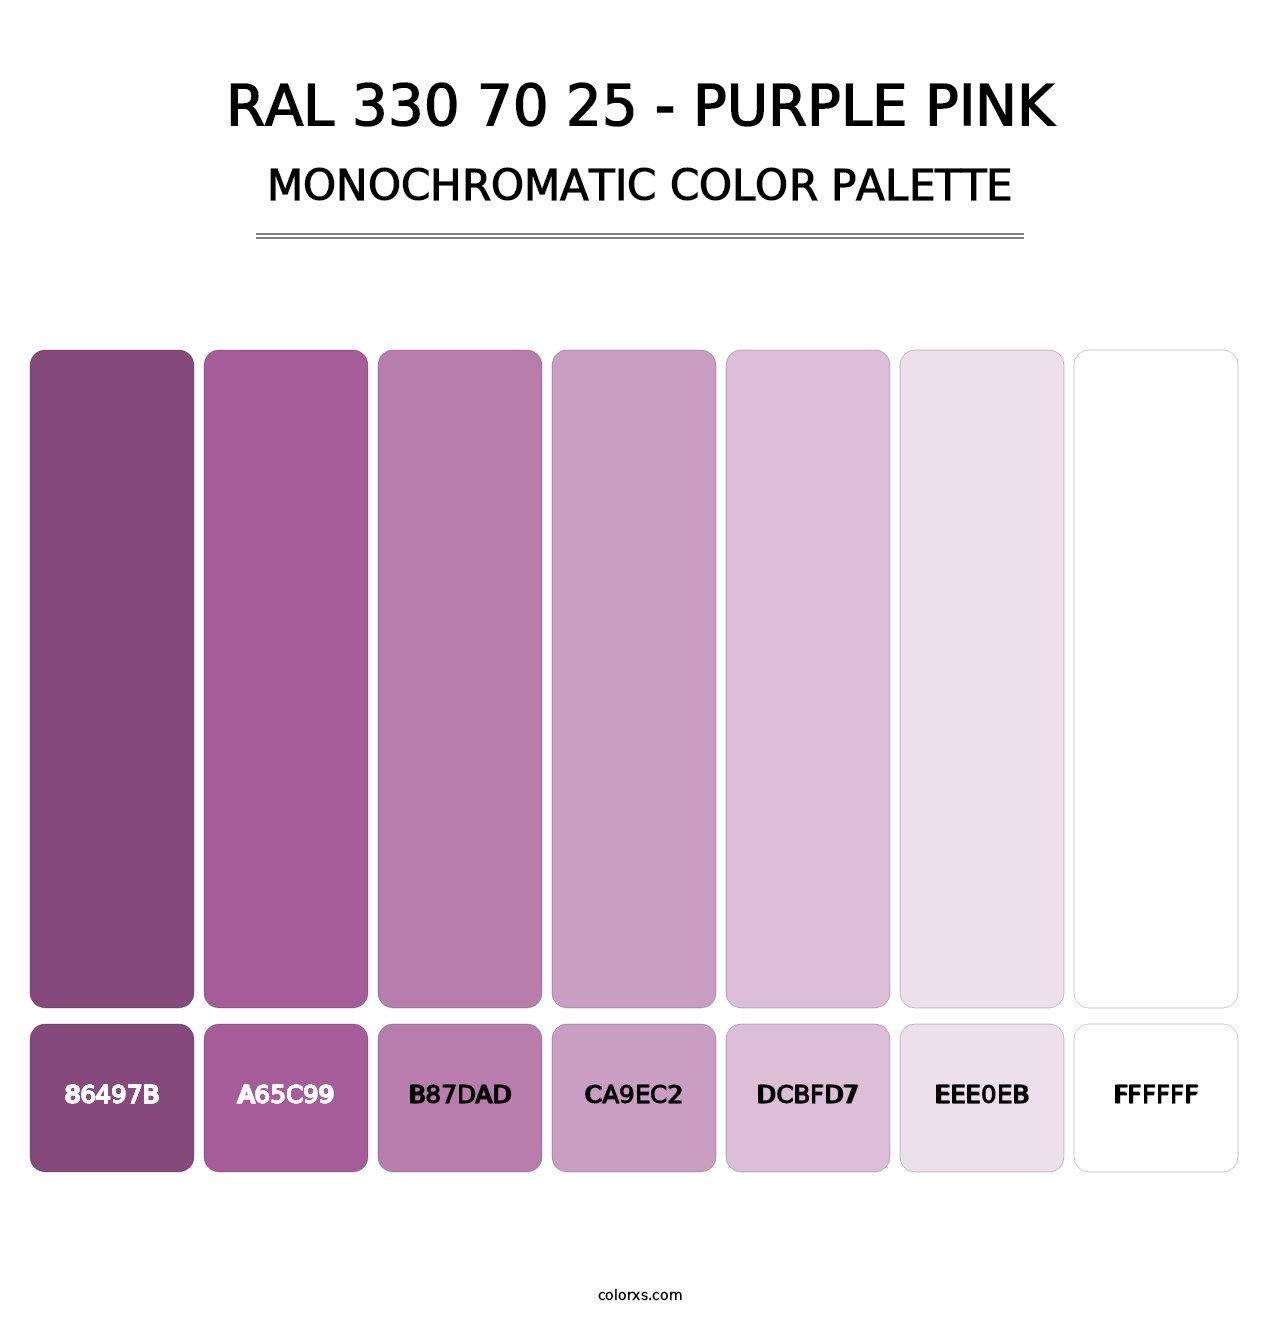 RAL 330 70 25 - Purple Pink - Monochromatic Color Palette